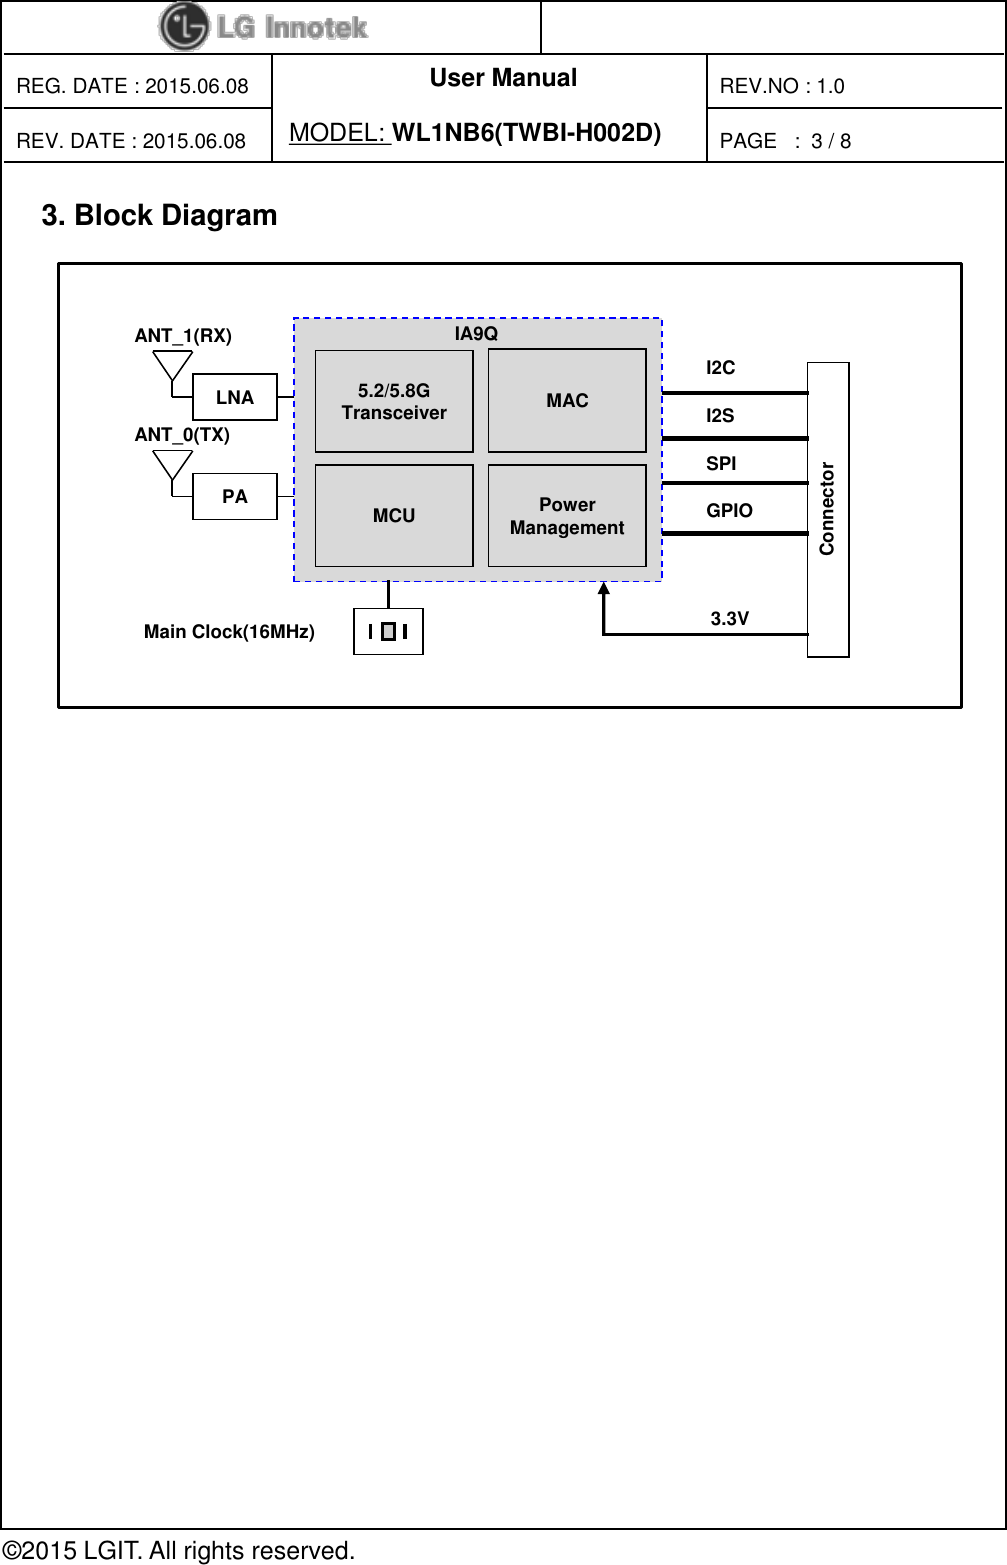 User Manual PAGE   : REG. DATE : 2015.06.08 MODEL: WL1NB6(TWBI-H002D) REV. DATE : 2015.06.08 REV.NO : 1.0 © 2015 LGIT. All rights reserved. 3 / 8 3. Block Diagram Main Clock(16MHz) ANT_1(RX) Power Management IA9Q Connector I2C I2S SPI GPIO 3.3V MAC MCU 5.2/5.8G Transceiver ANT_0(TX) LNA PA 